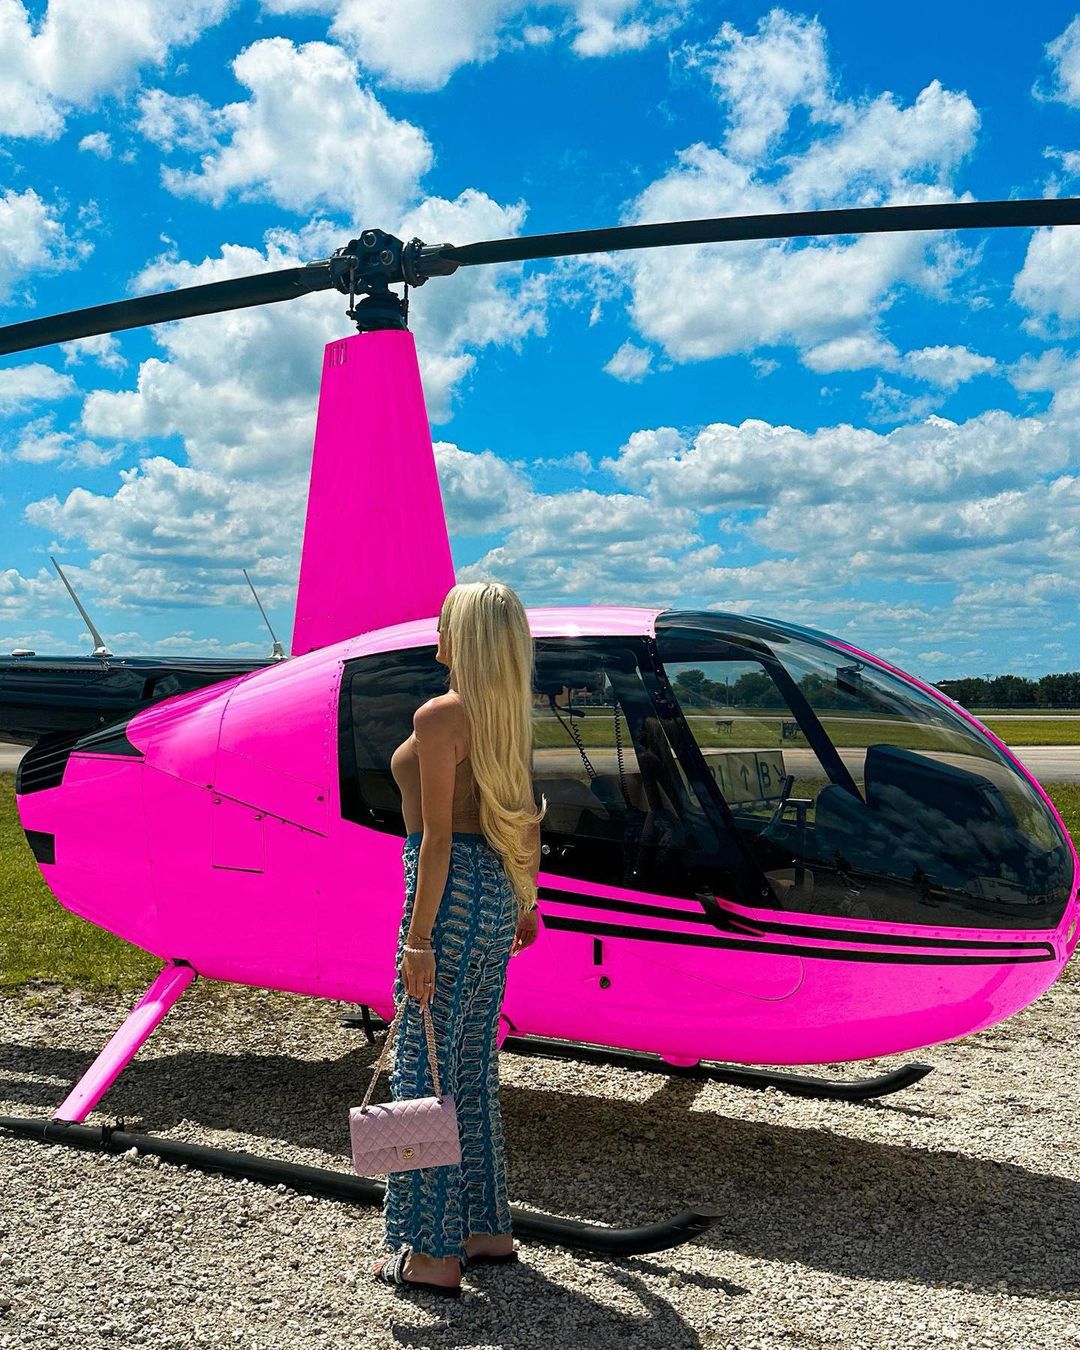 Caroline Derpieński lata helikopterem nad Miami